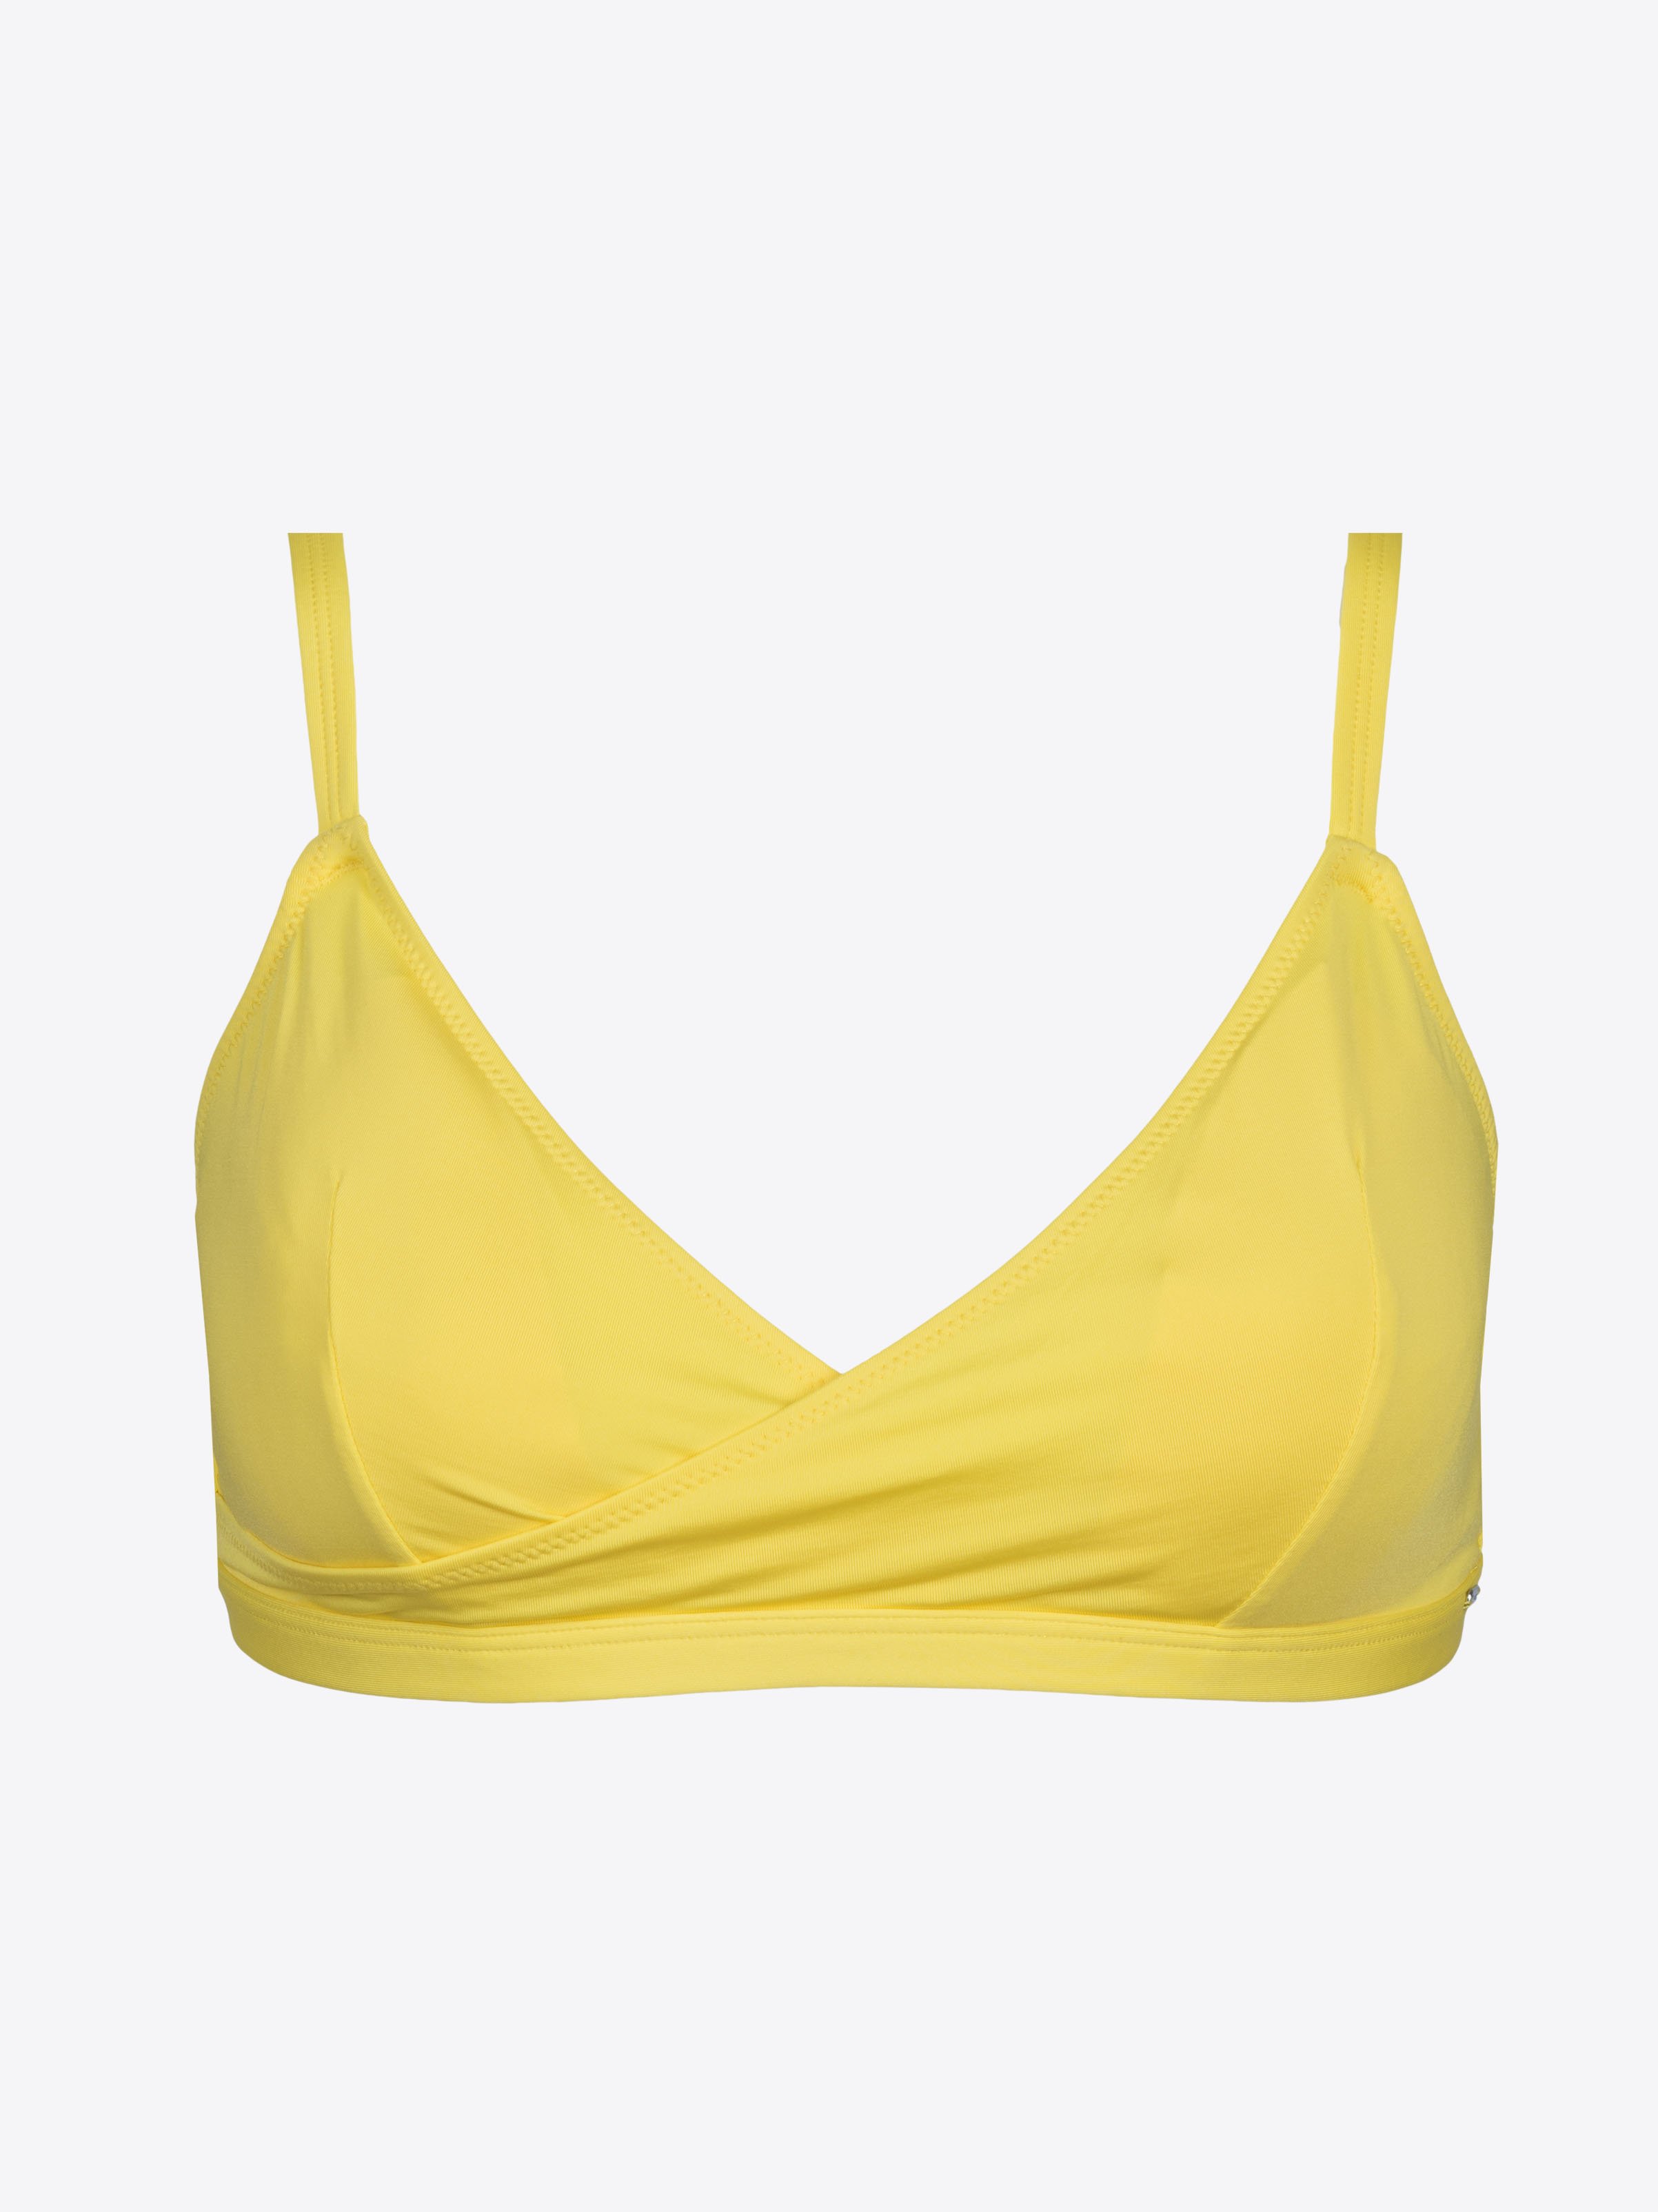 Tori Triangle Bikini Top - Blazing Yellow - $19.80 - CHANGE Lingerie